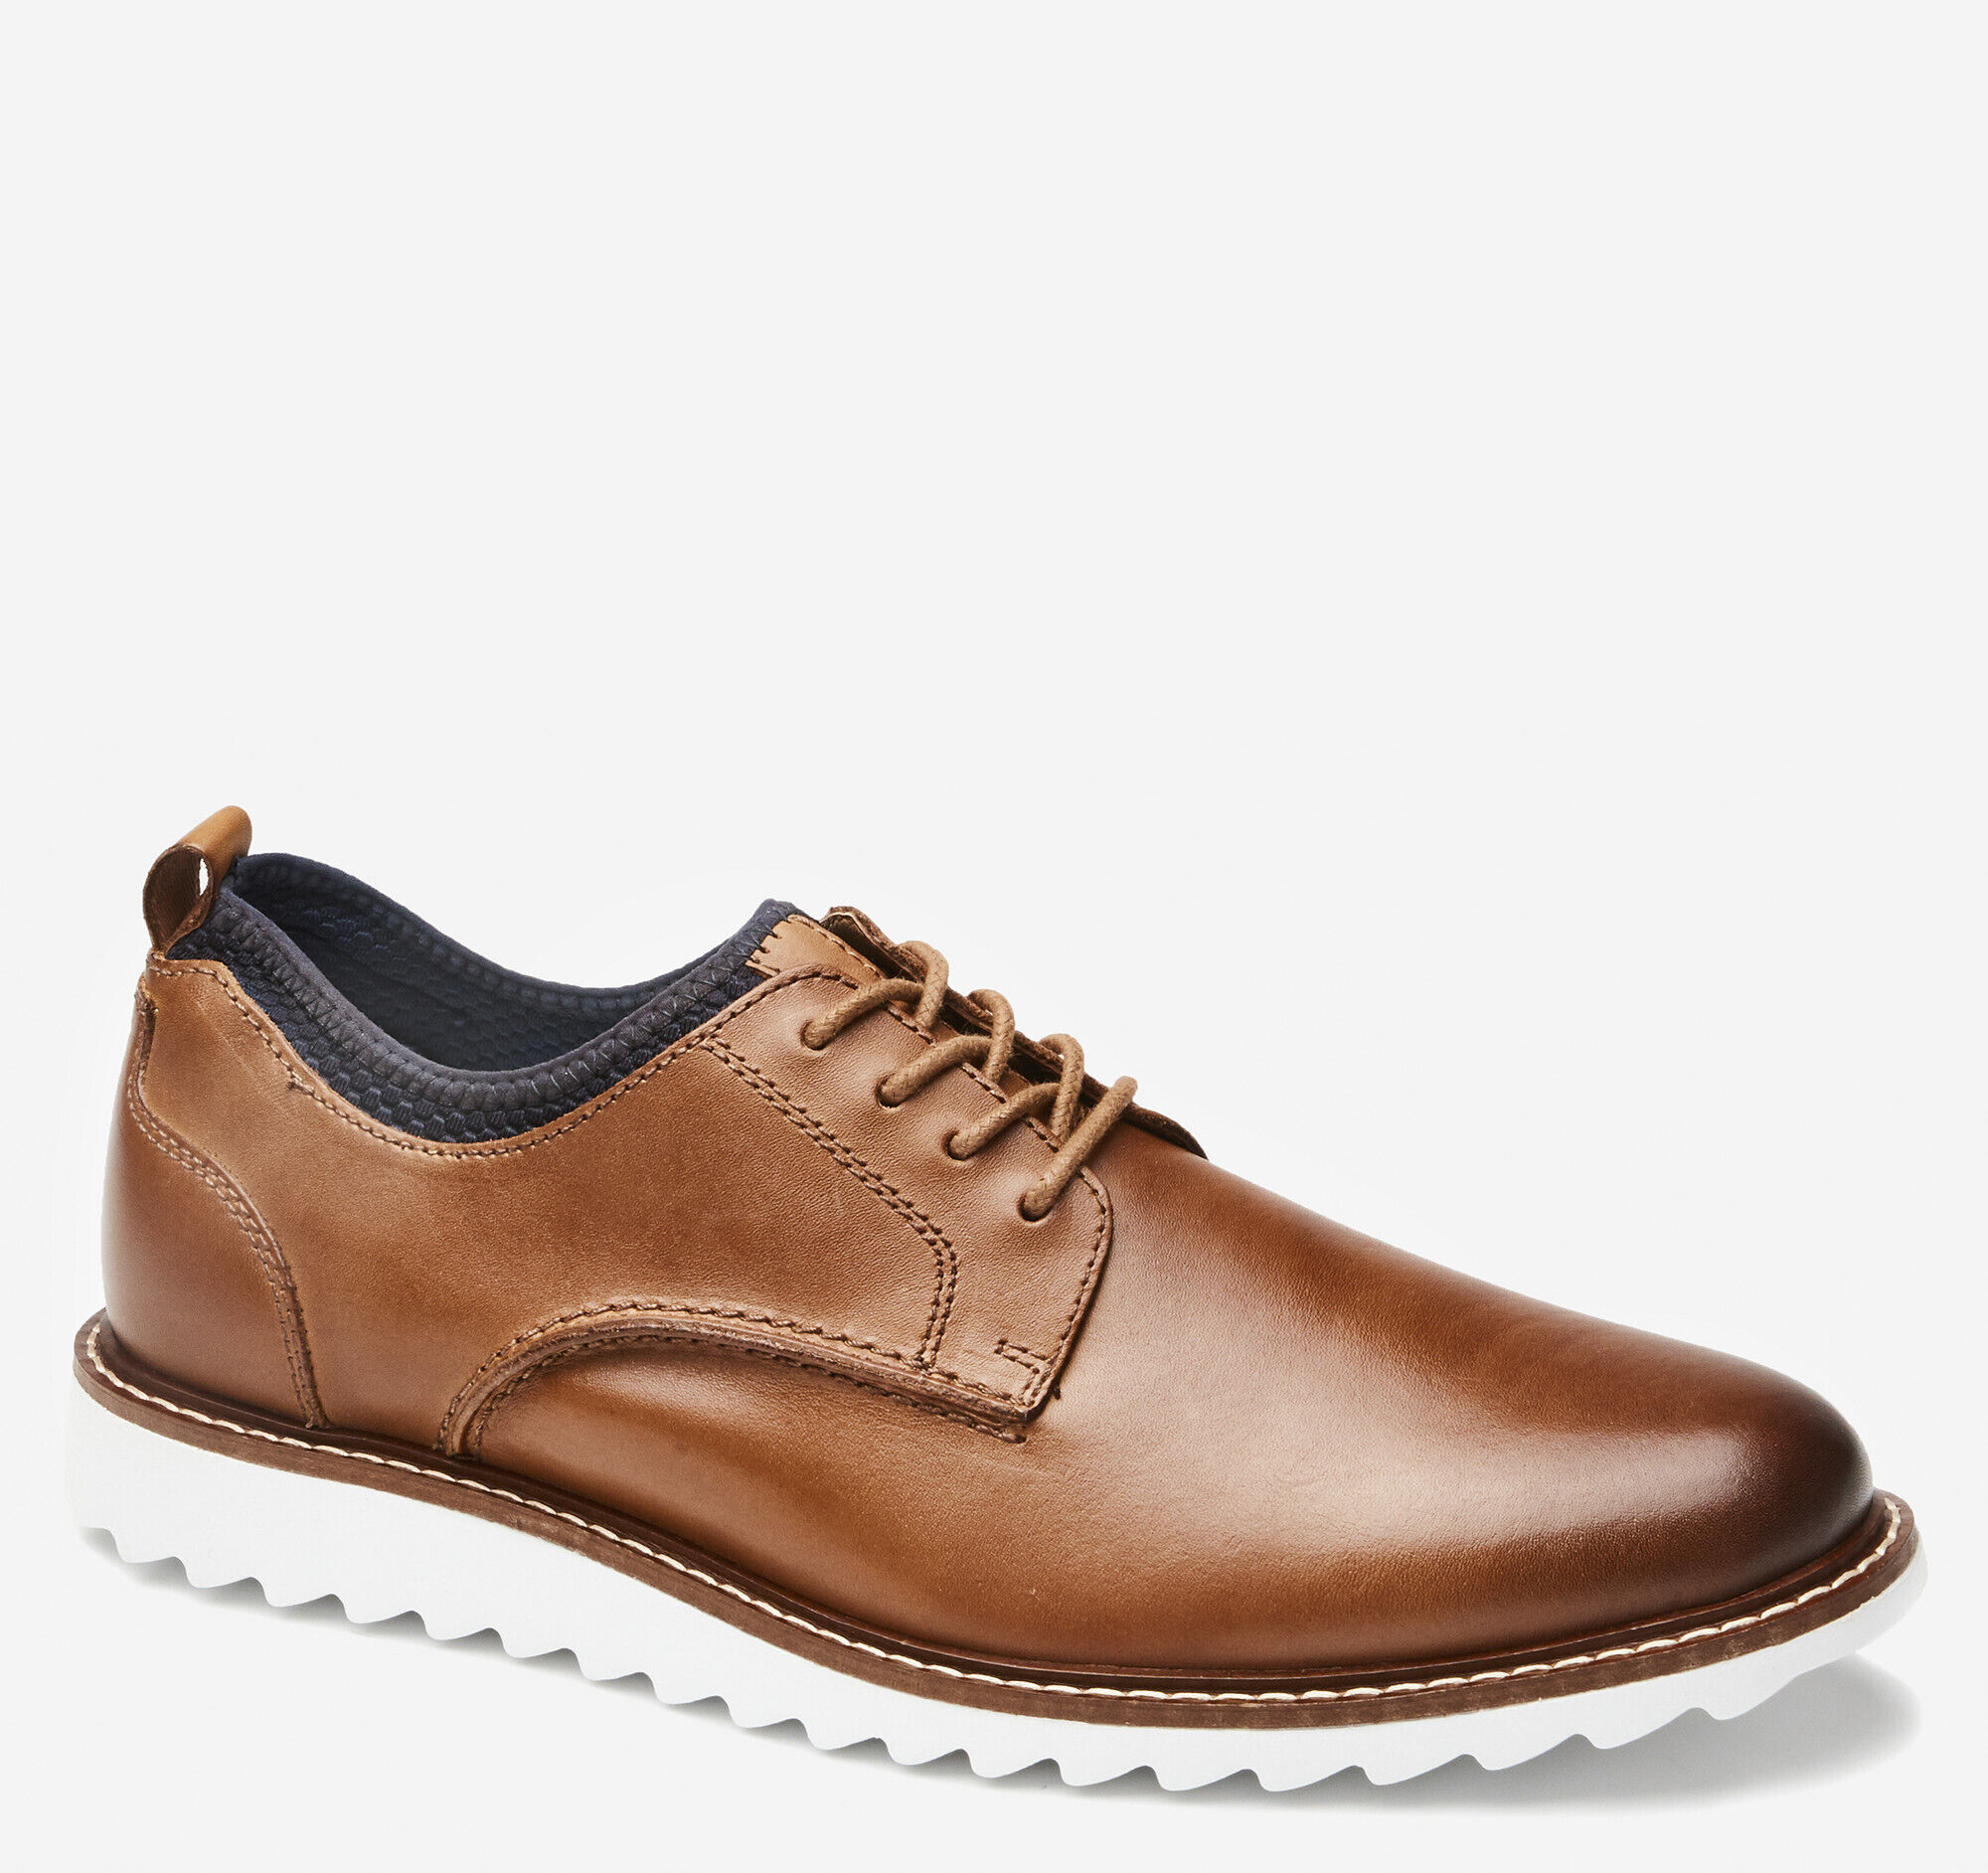 156202 SP50 Men's Shoes Size 9 M Brown Leather Buckle Johnston & Murphy 